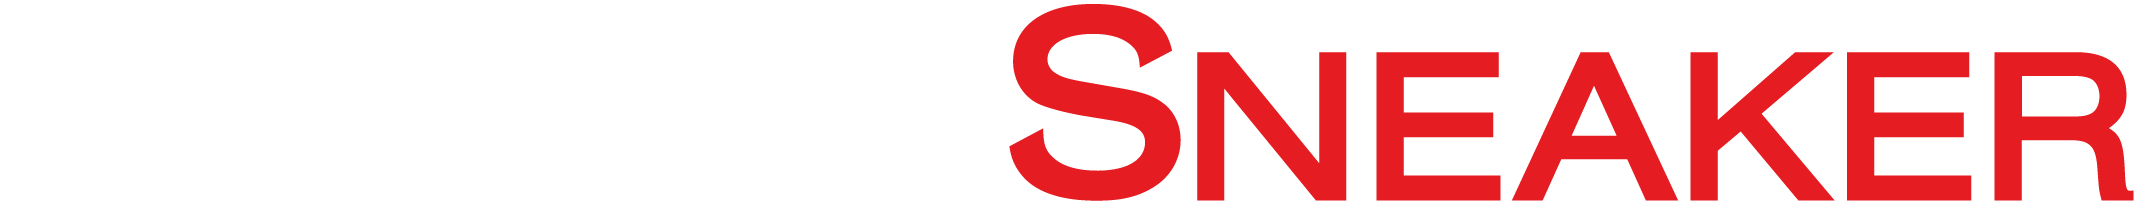 PocketSneaker Logo